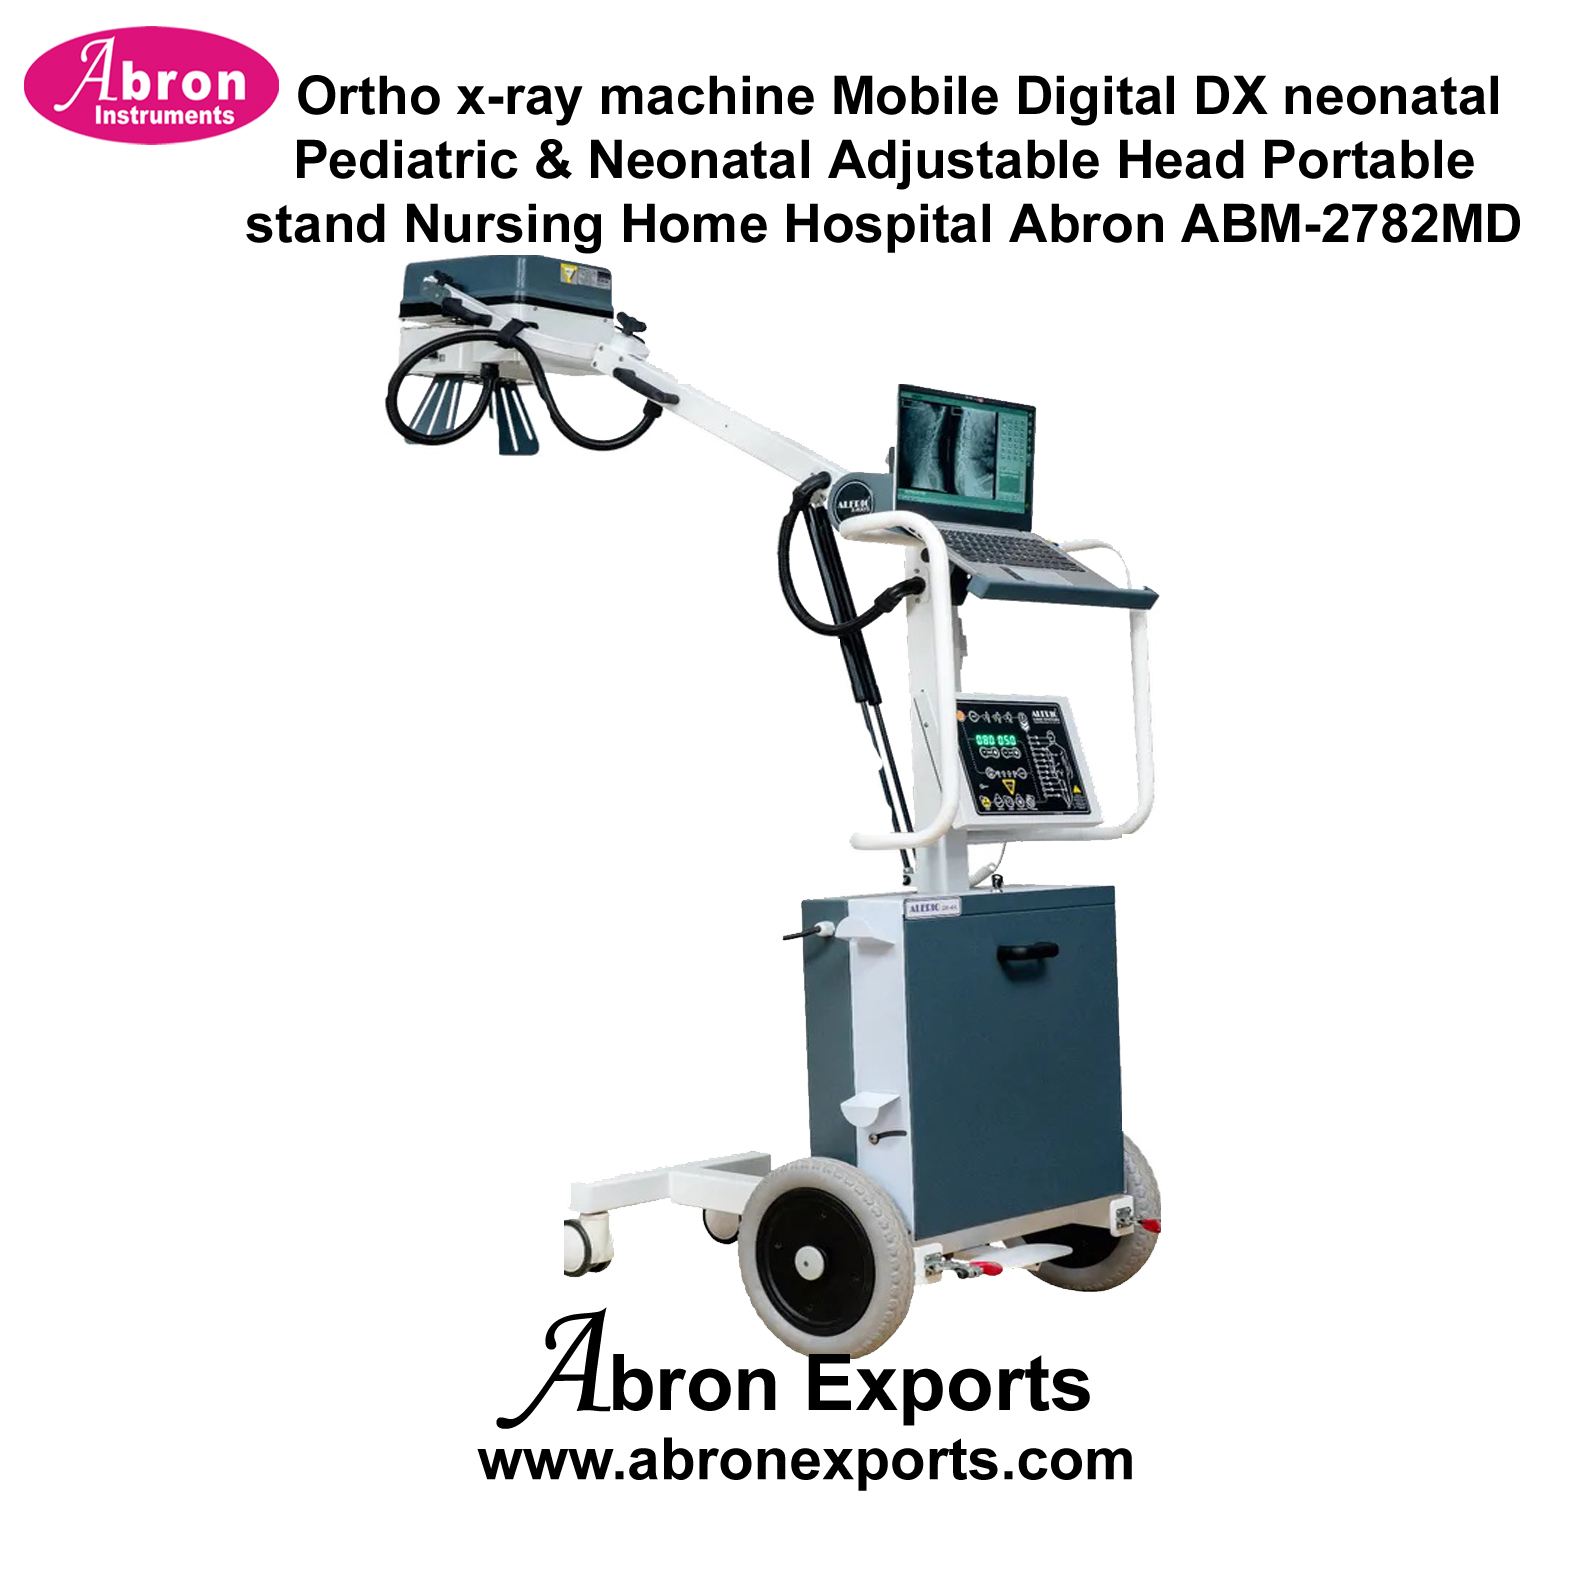 Ortho X-Ray Machine Mobile Digital DX neonatal Pediatric & Neonatal Adjustable Head Portable Stand Nursing Home Hospital Abron ABM-2782MD 